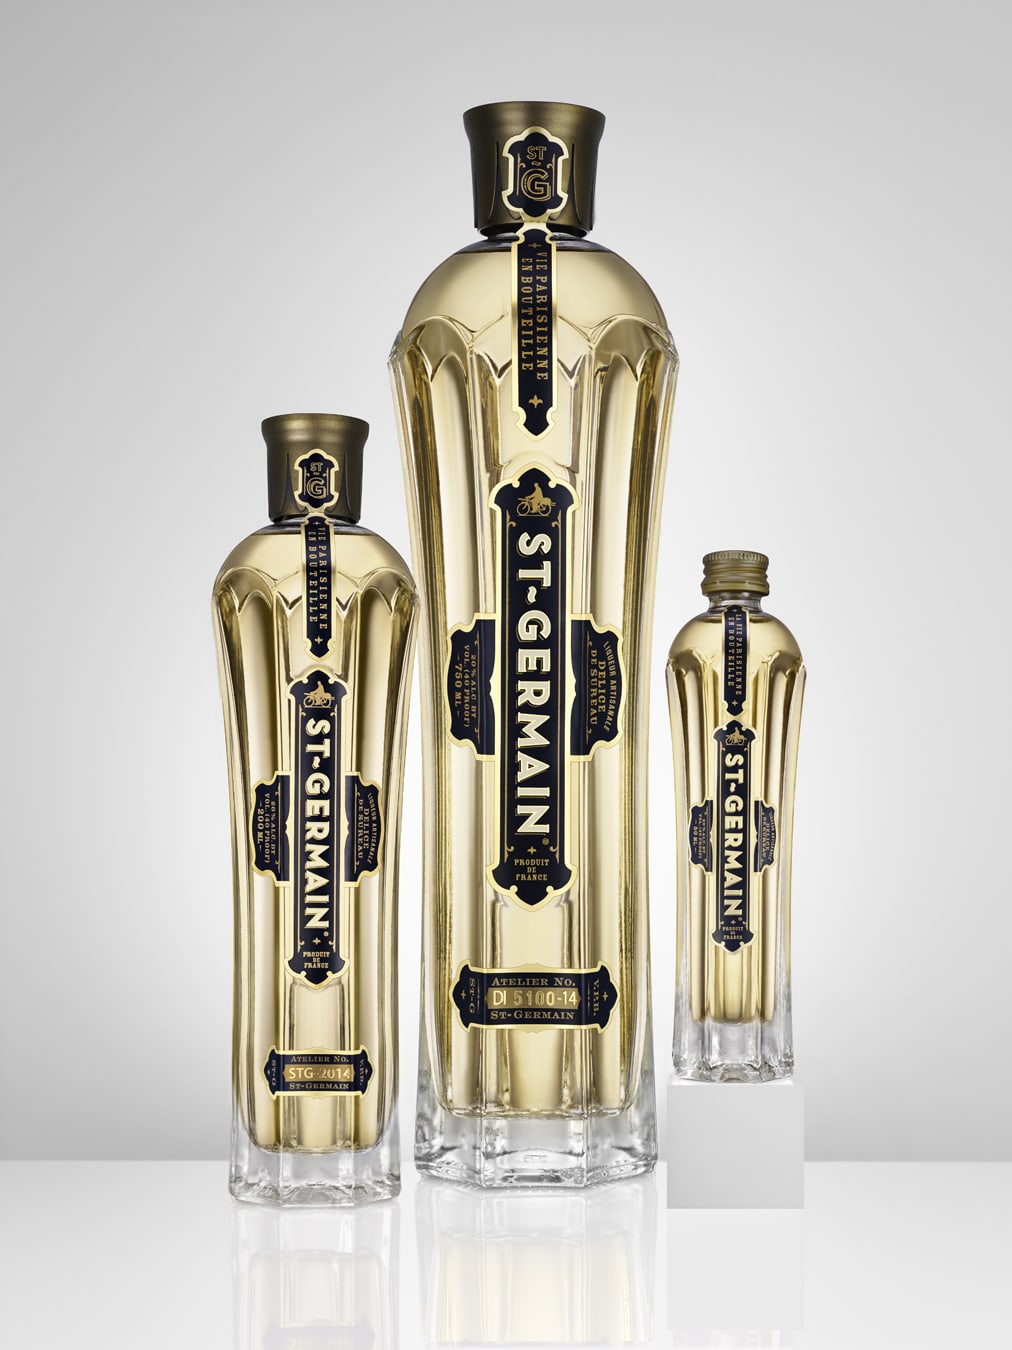 St-Germain spirits packaging bottles design